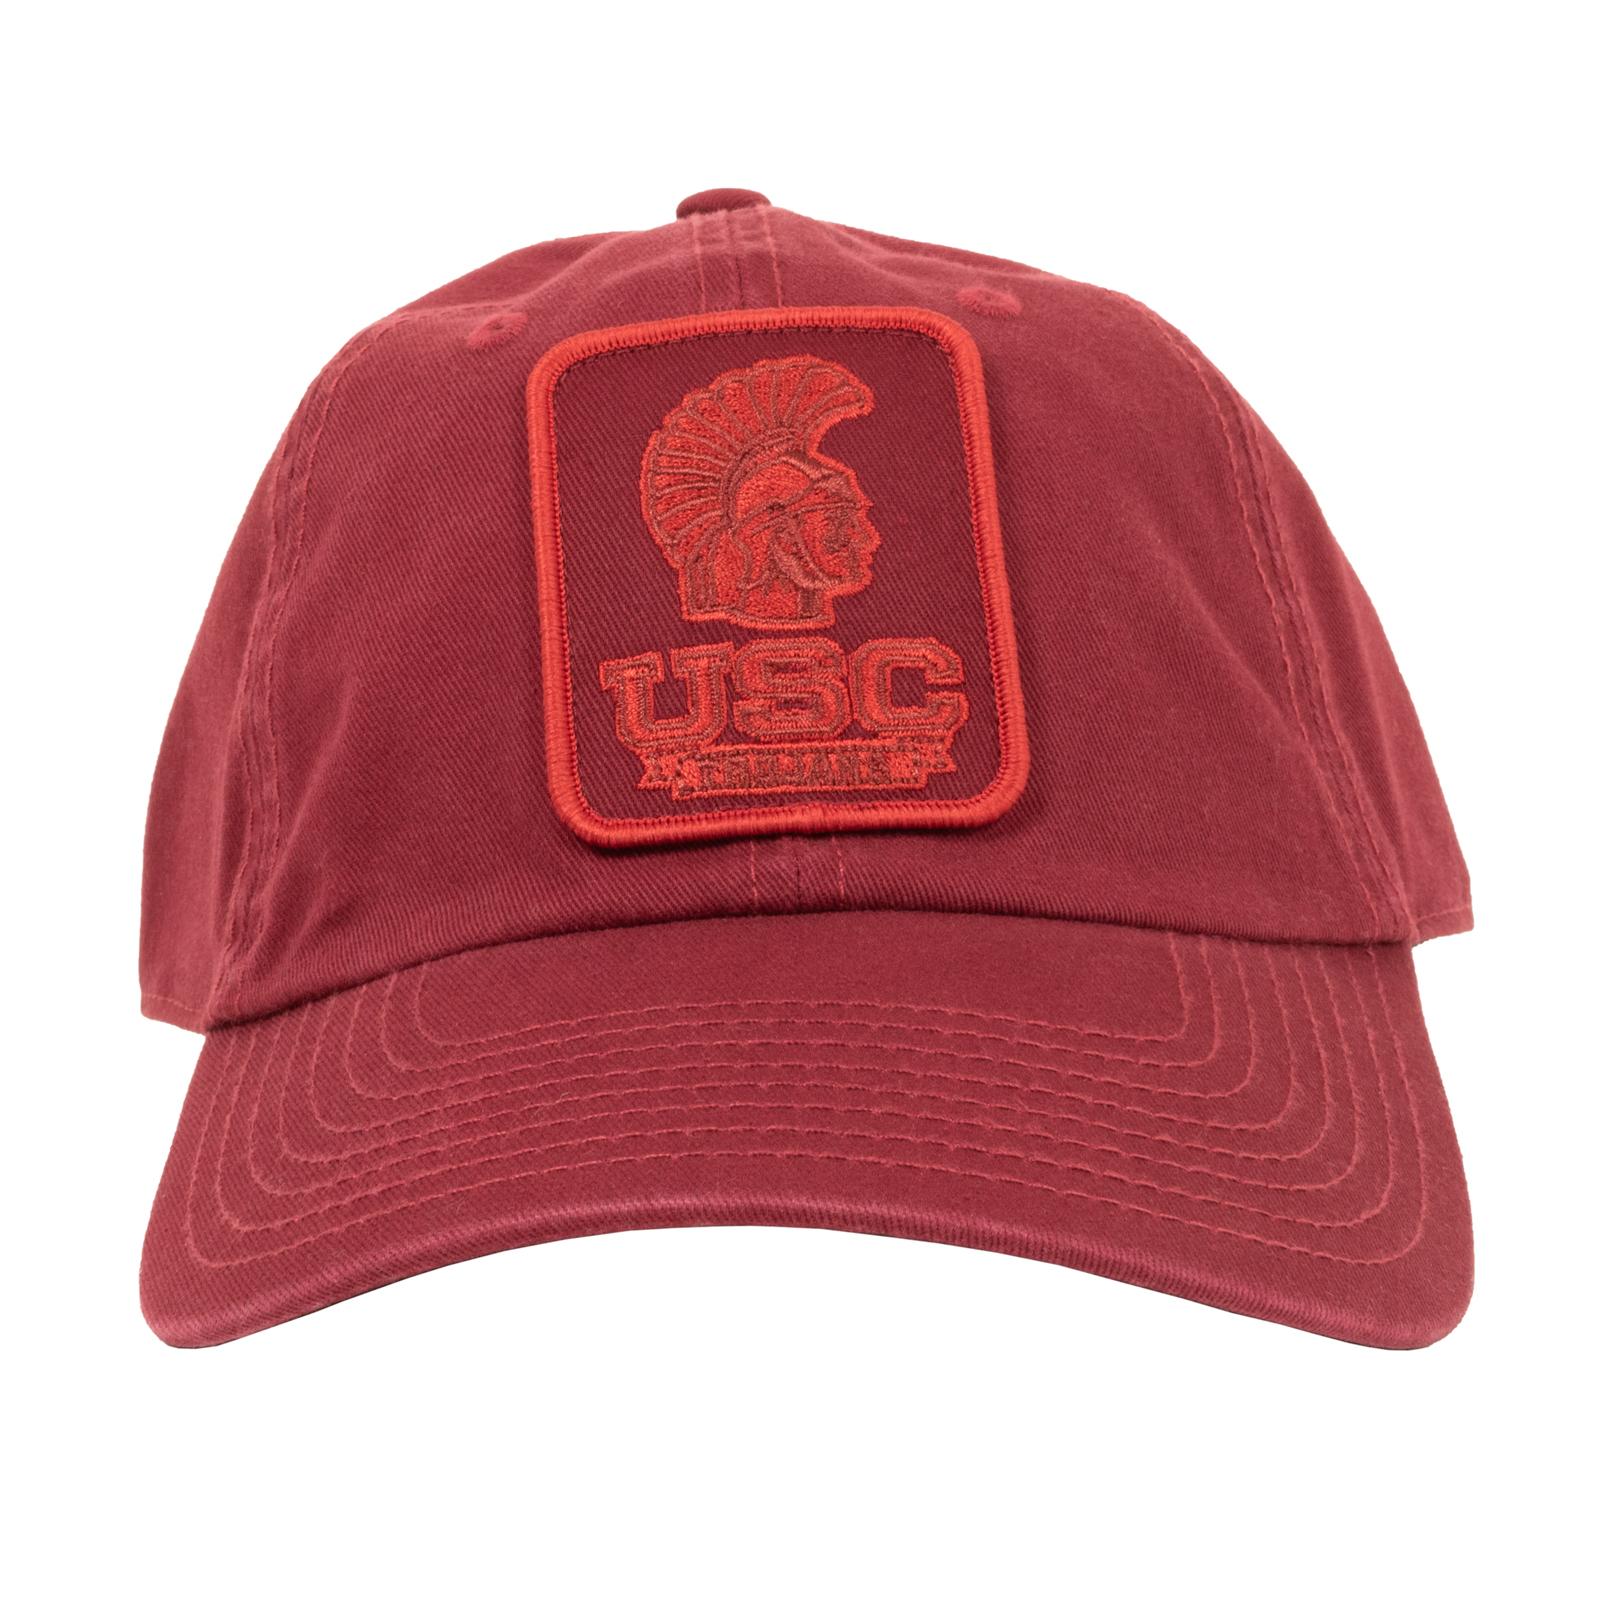 USC Conrad Adjustable Hat SP20 Cardinal image01